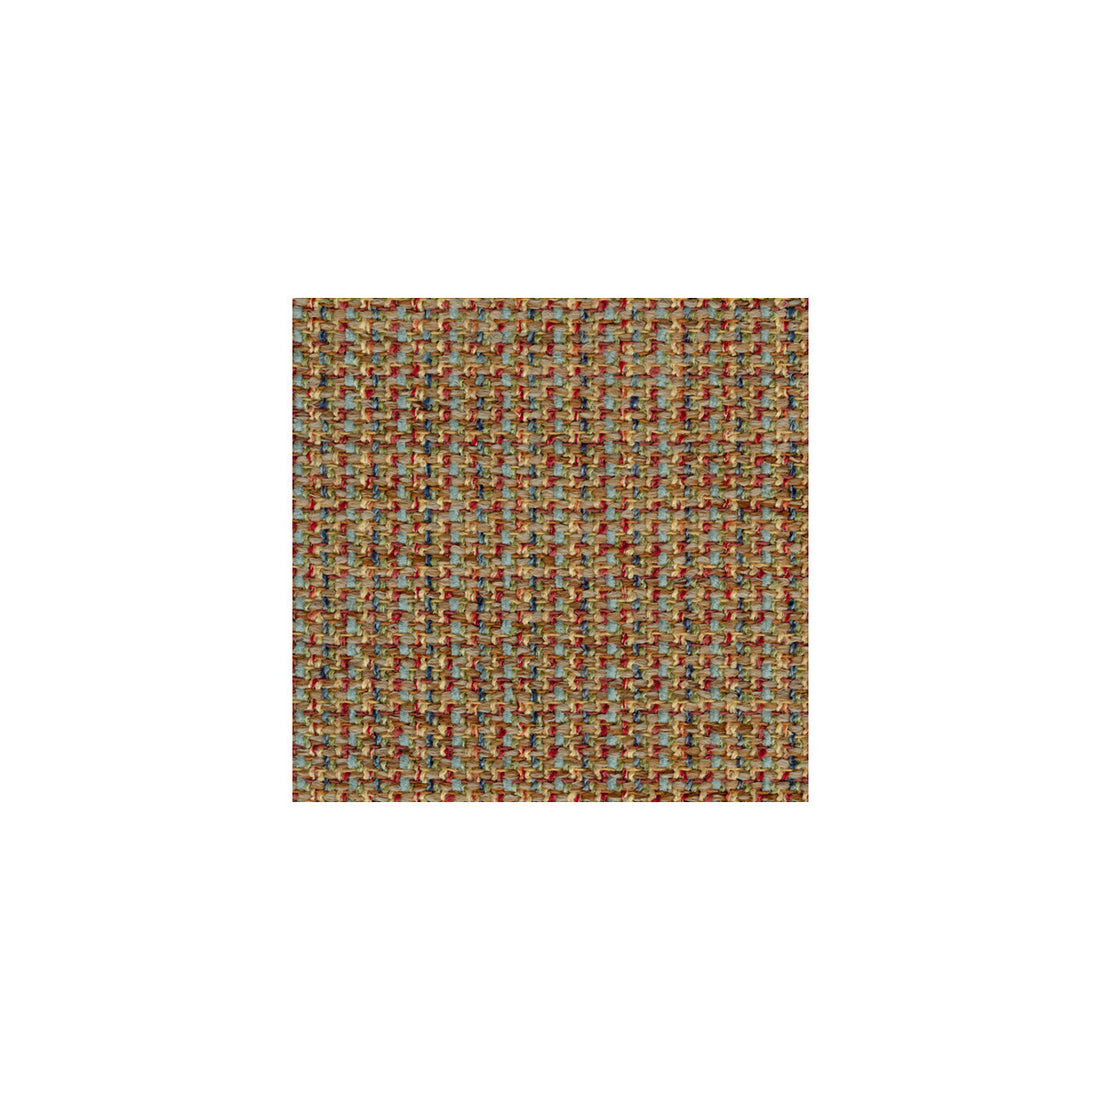 Kravet Smart fabric in 31164-415 color - pattern 31164.415.0 - by Kravet Smart